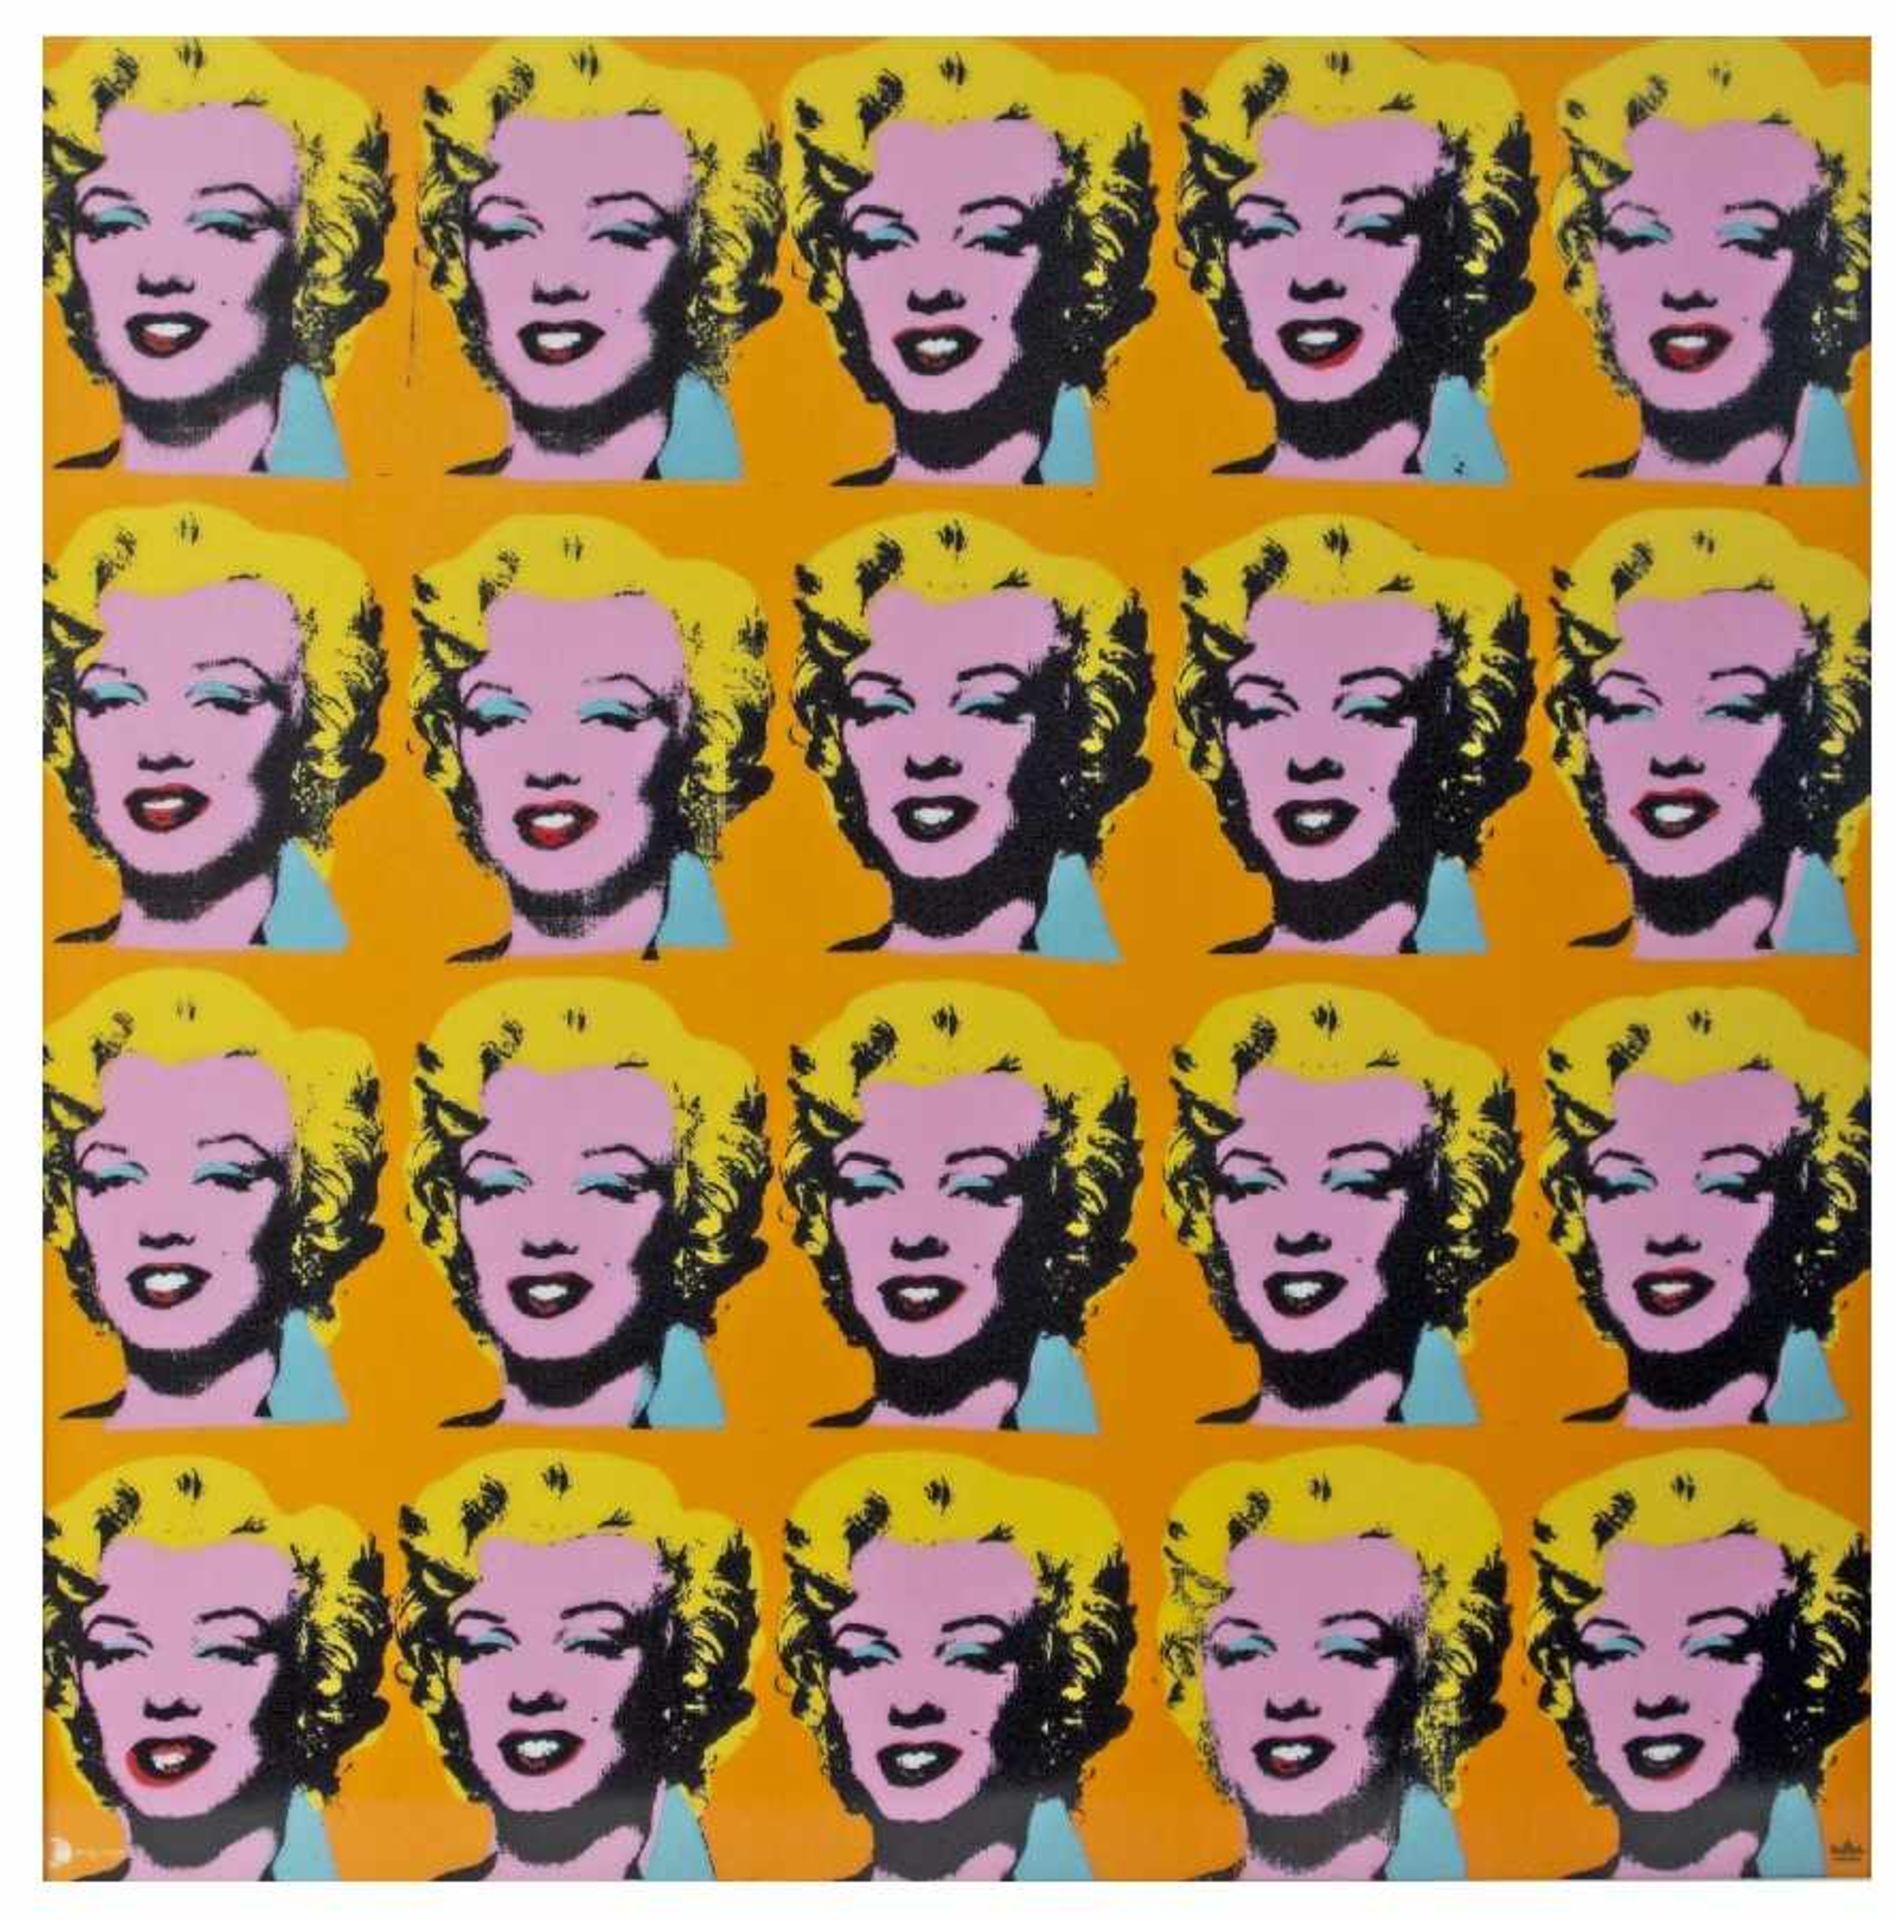 Nach Andy Warhol1928 - 1987Wandbild Marilyn OrangePorzellanplatte der Edition Rosenthal Studio Line;